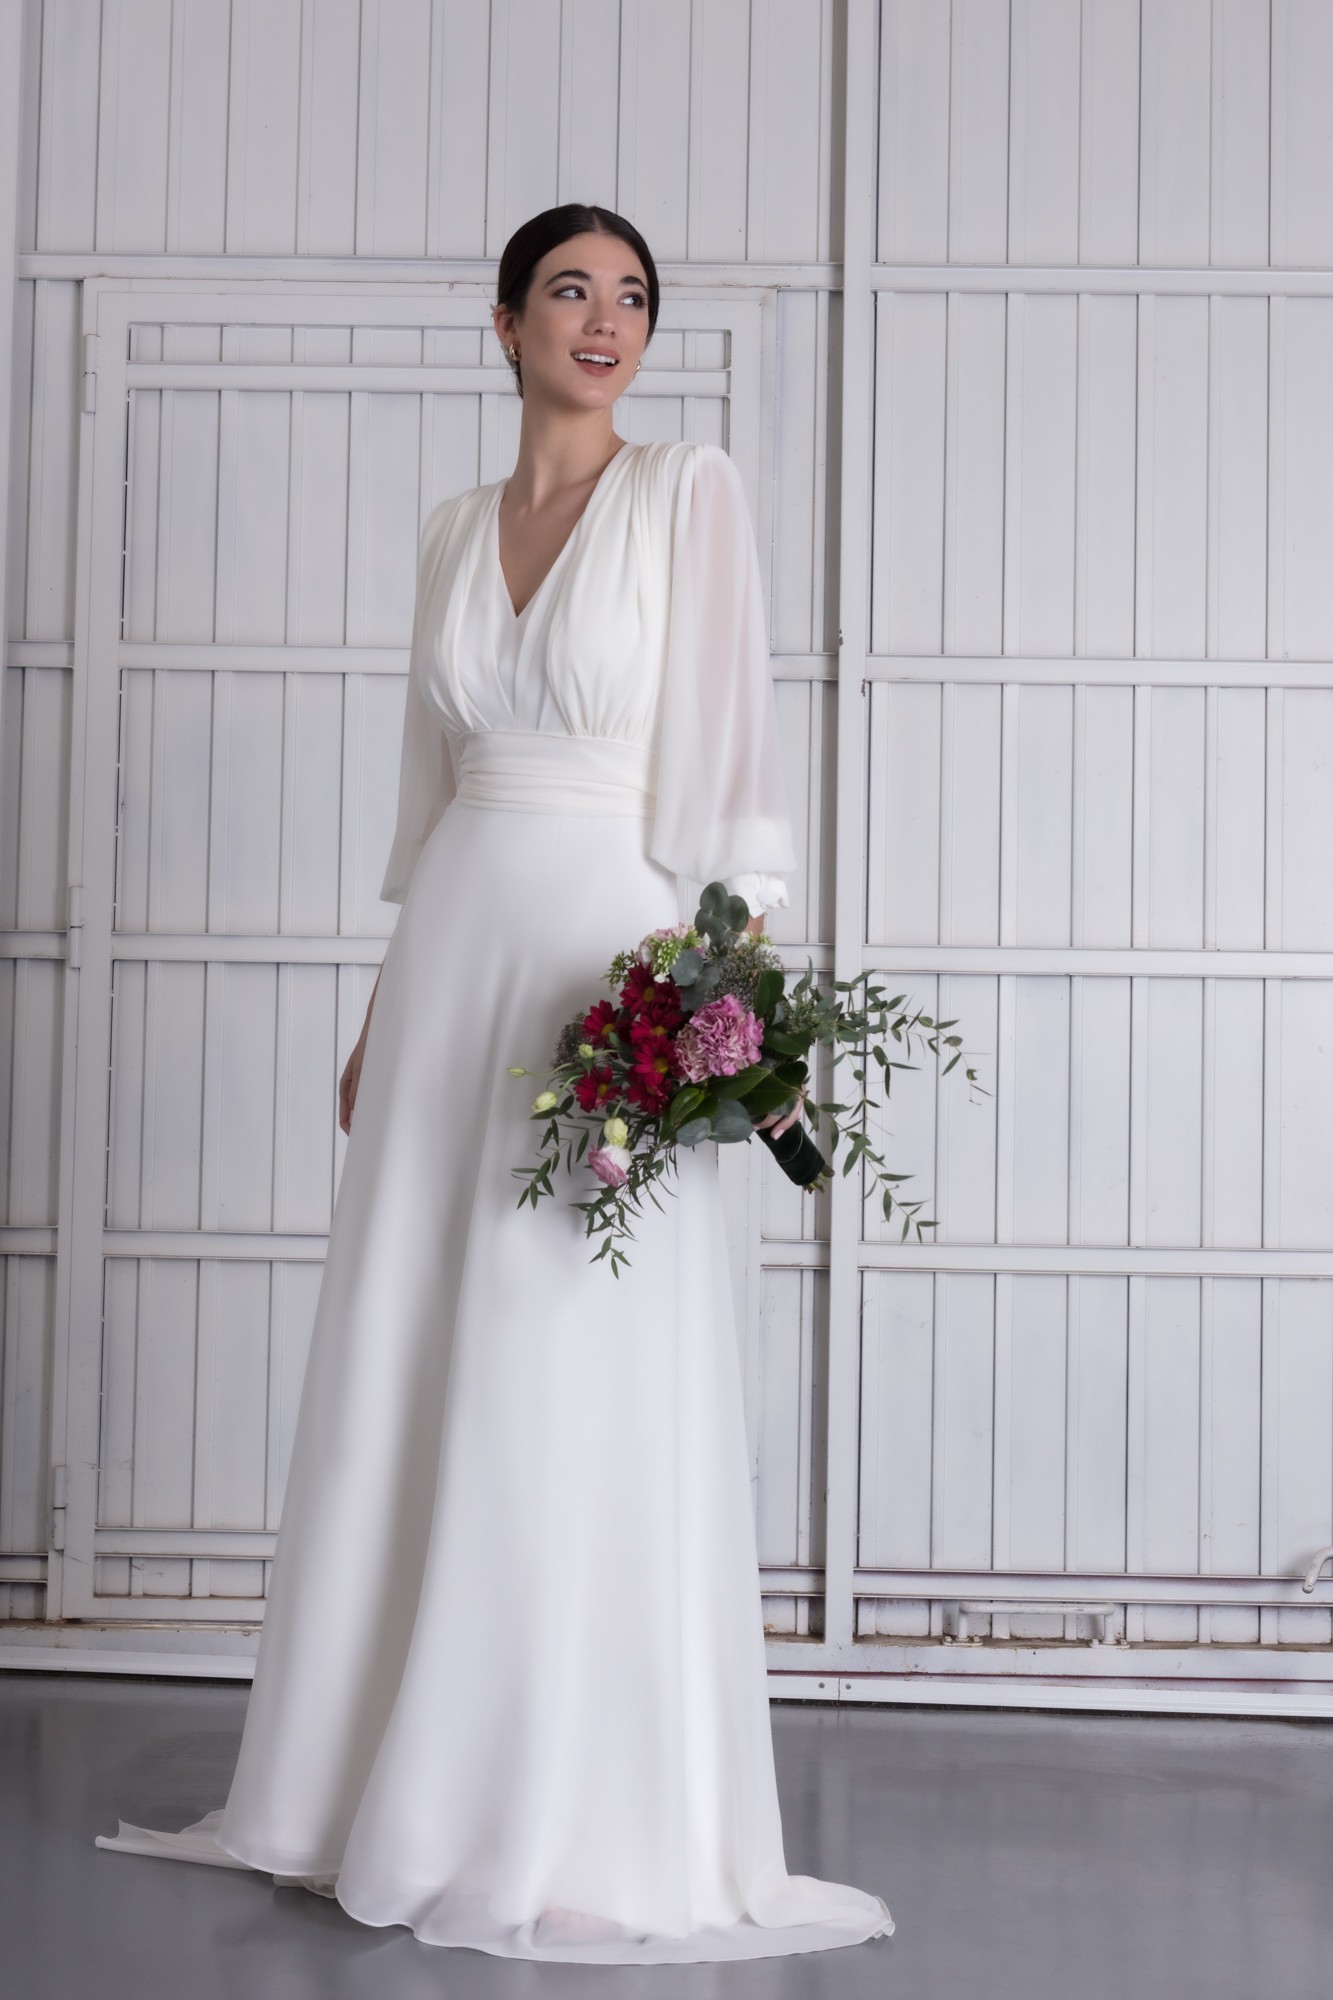 Viviana wedding dress - Matilde Cano